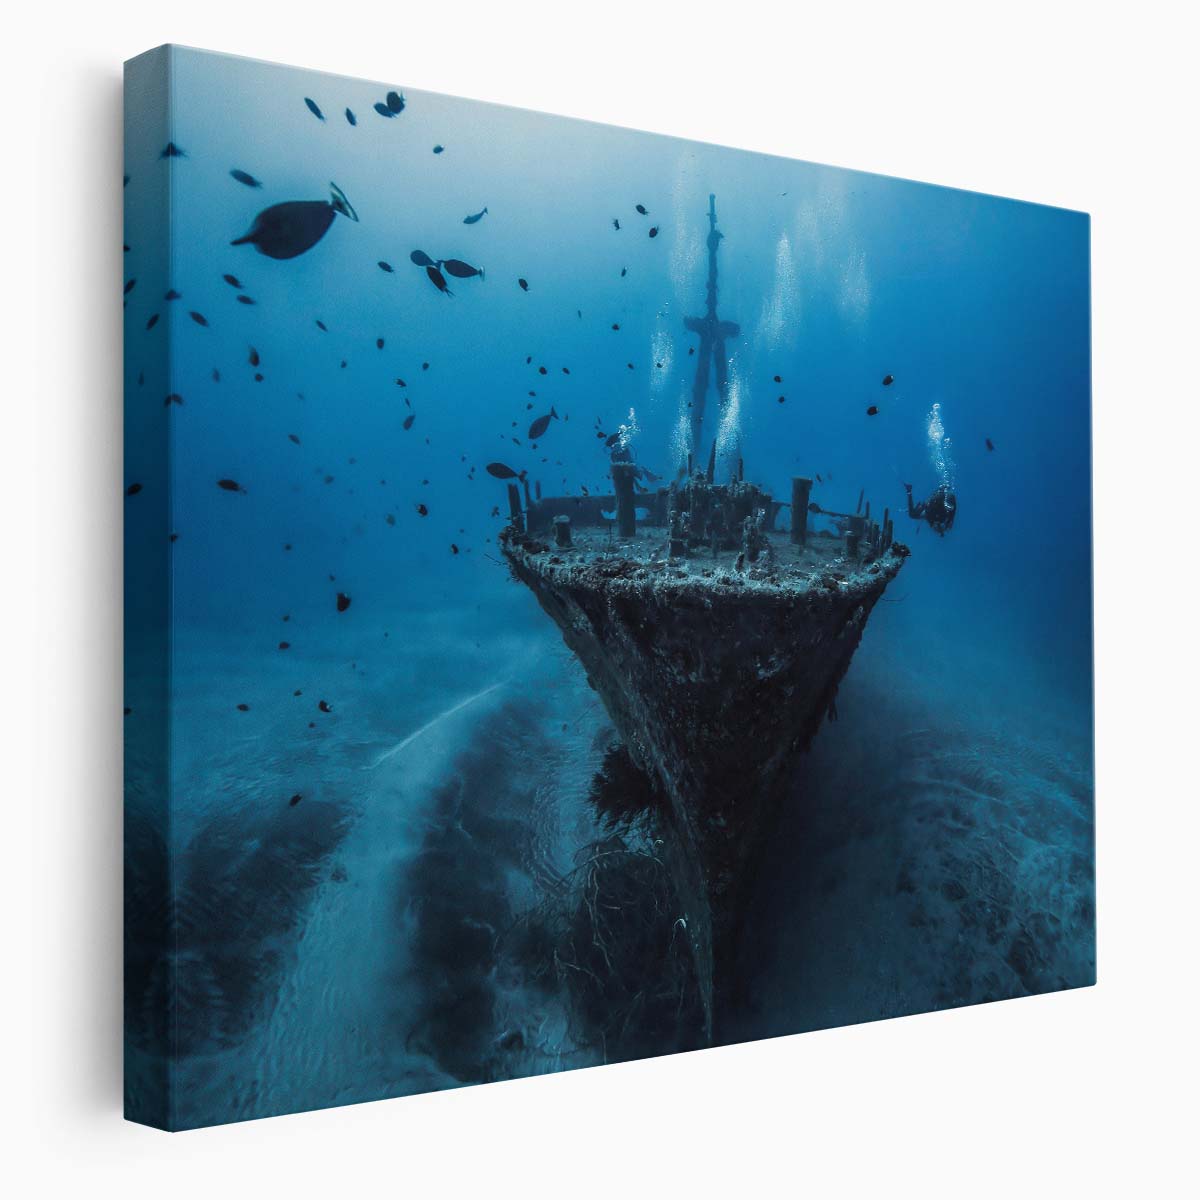 Sunken Shipwreck Adventure Deep Ocean Wall Art by Luxuriance Designs. Made in USA.